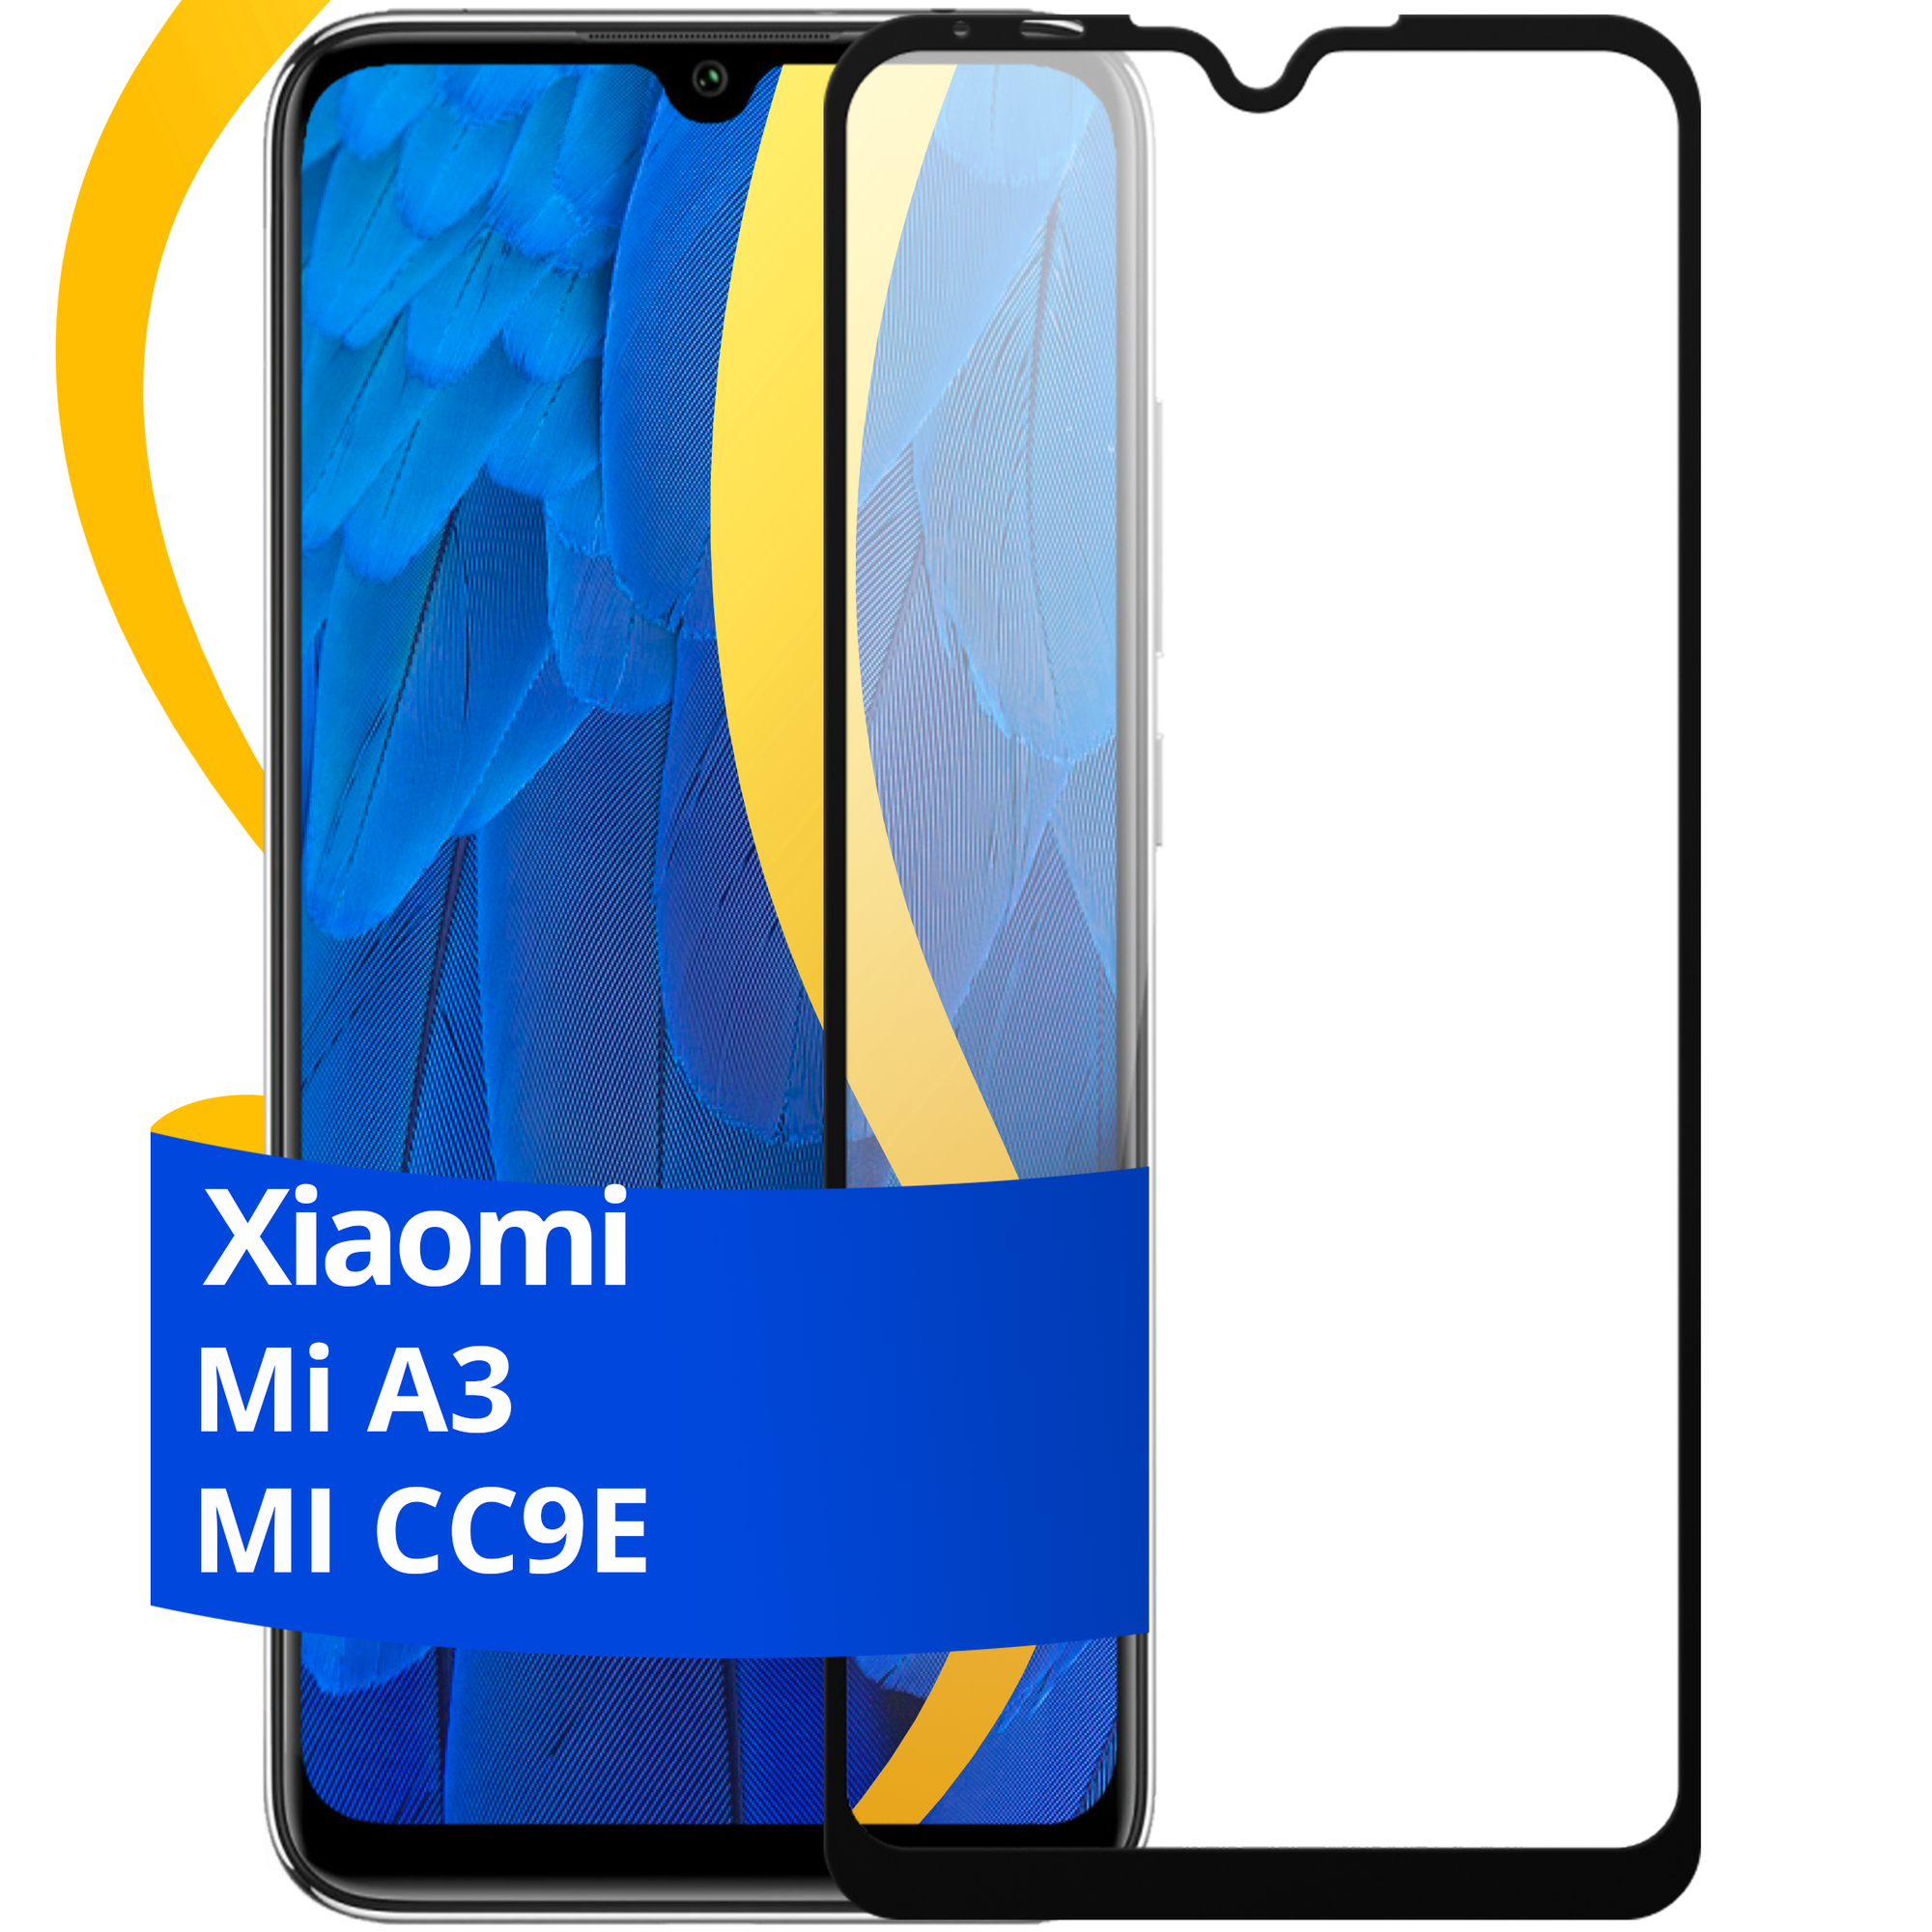 Глянцевое защитное стекло для телефона Xiaomi Mi A3 и Mi CC9E / Противоударное стекло с олеофобным покрытием на смартфон Сяоми Ми А3 и Ми СС9Е